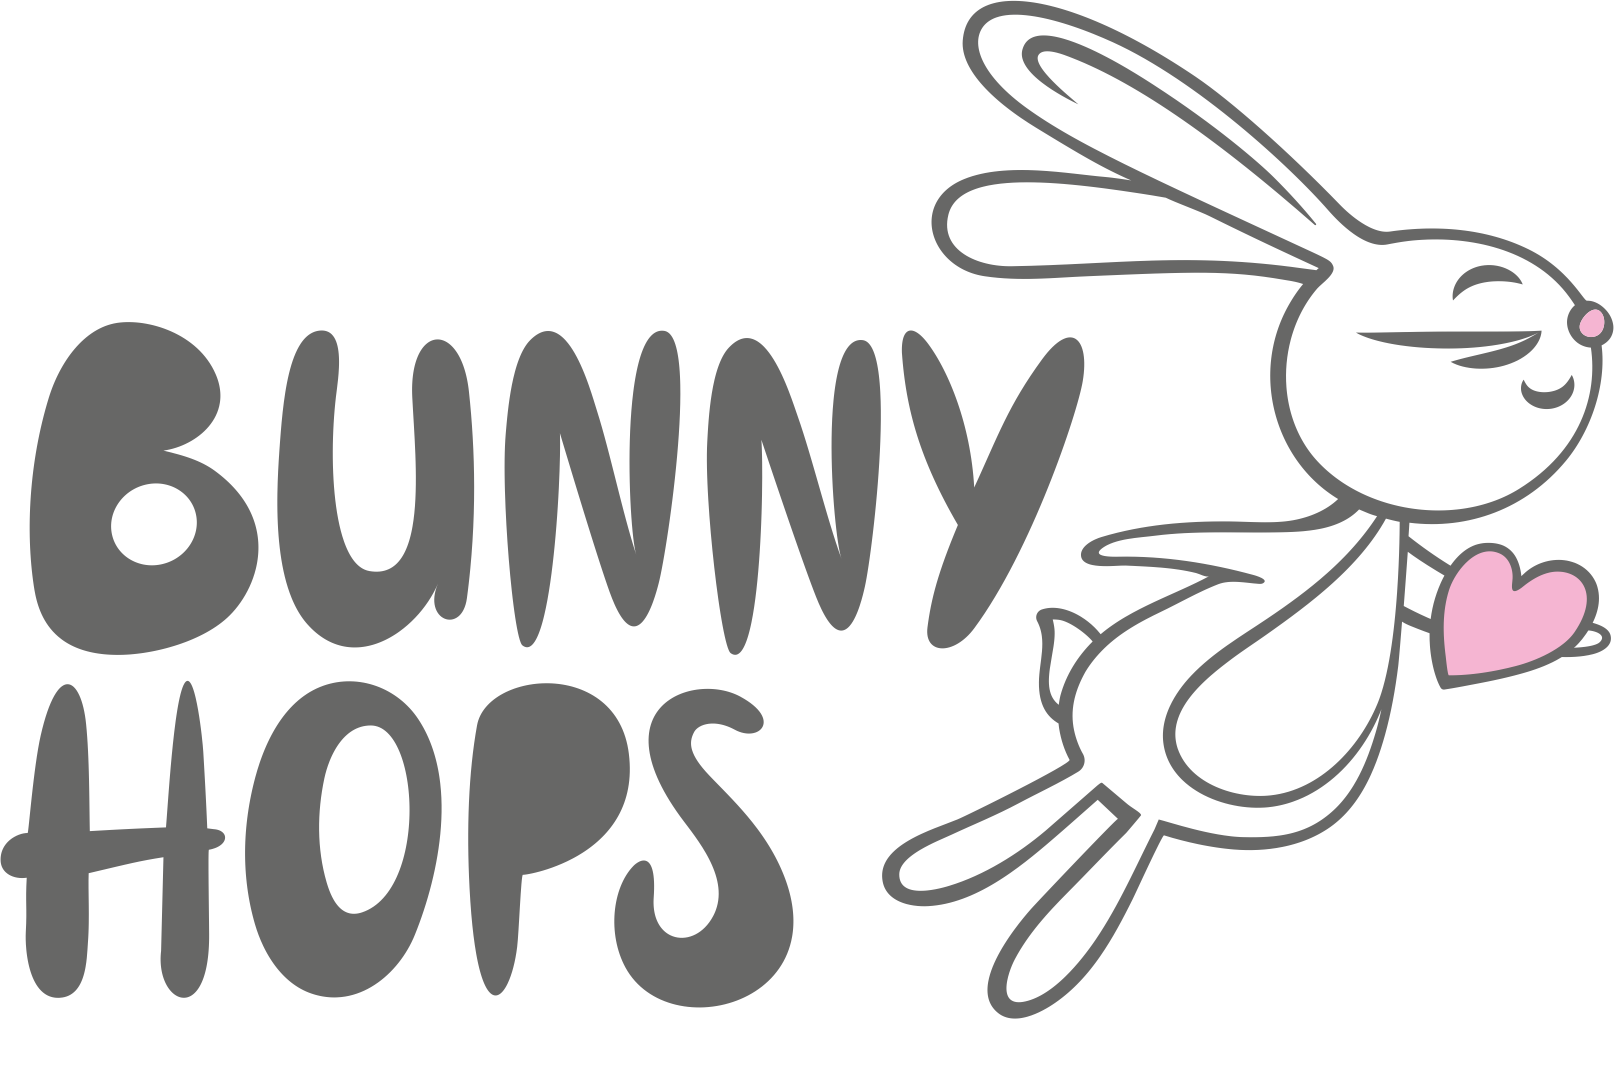 Bunnyhops